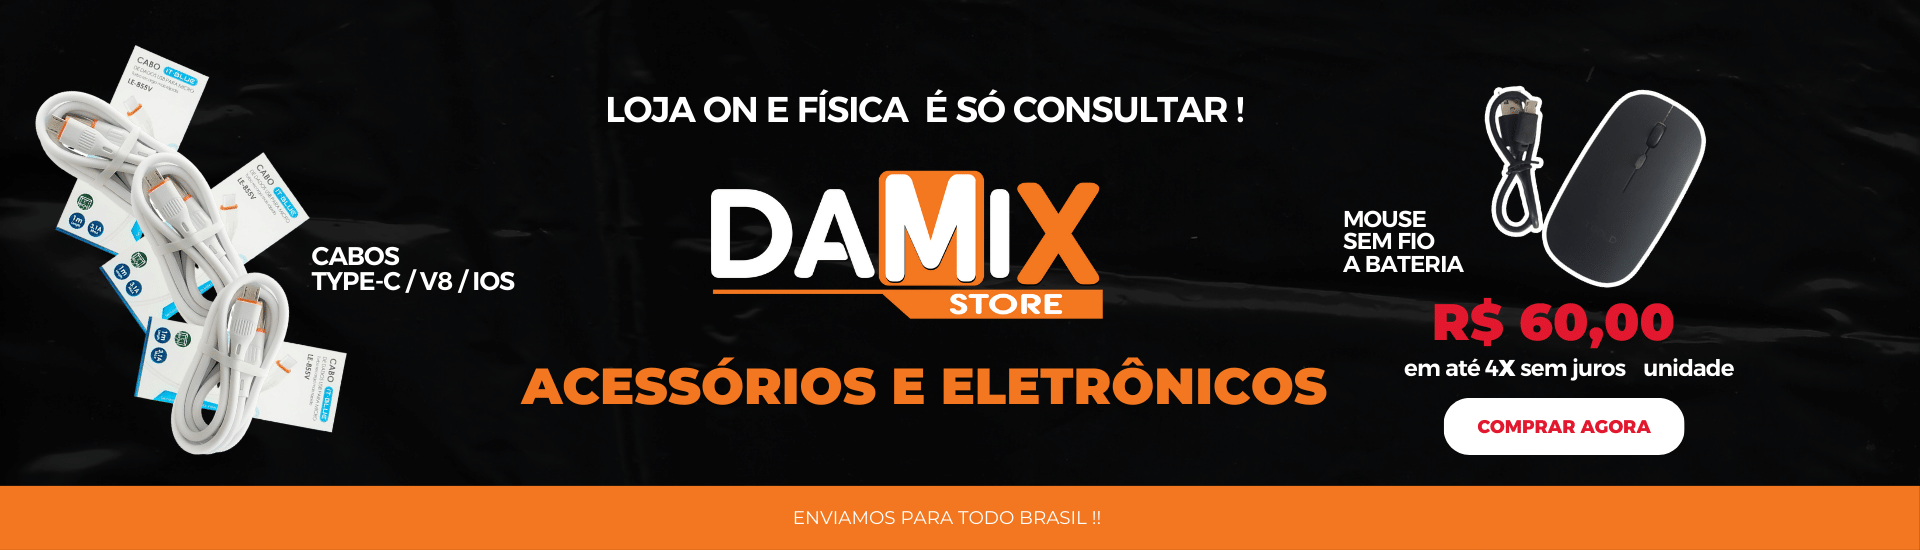 damix_store_eletronicos